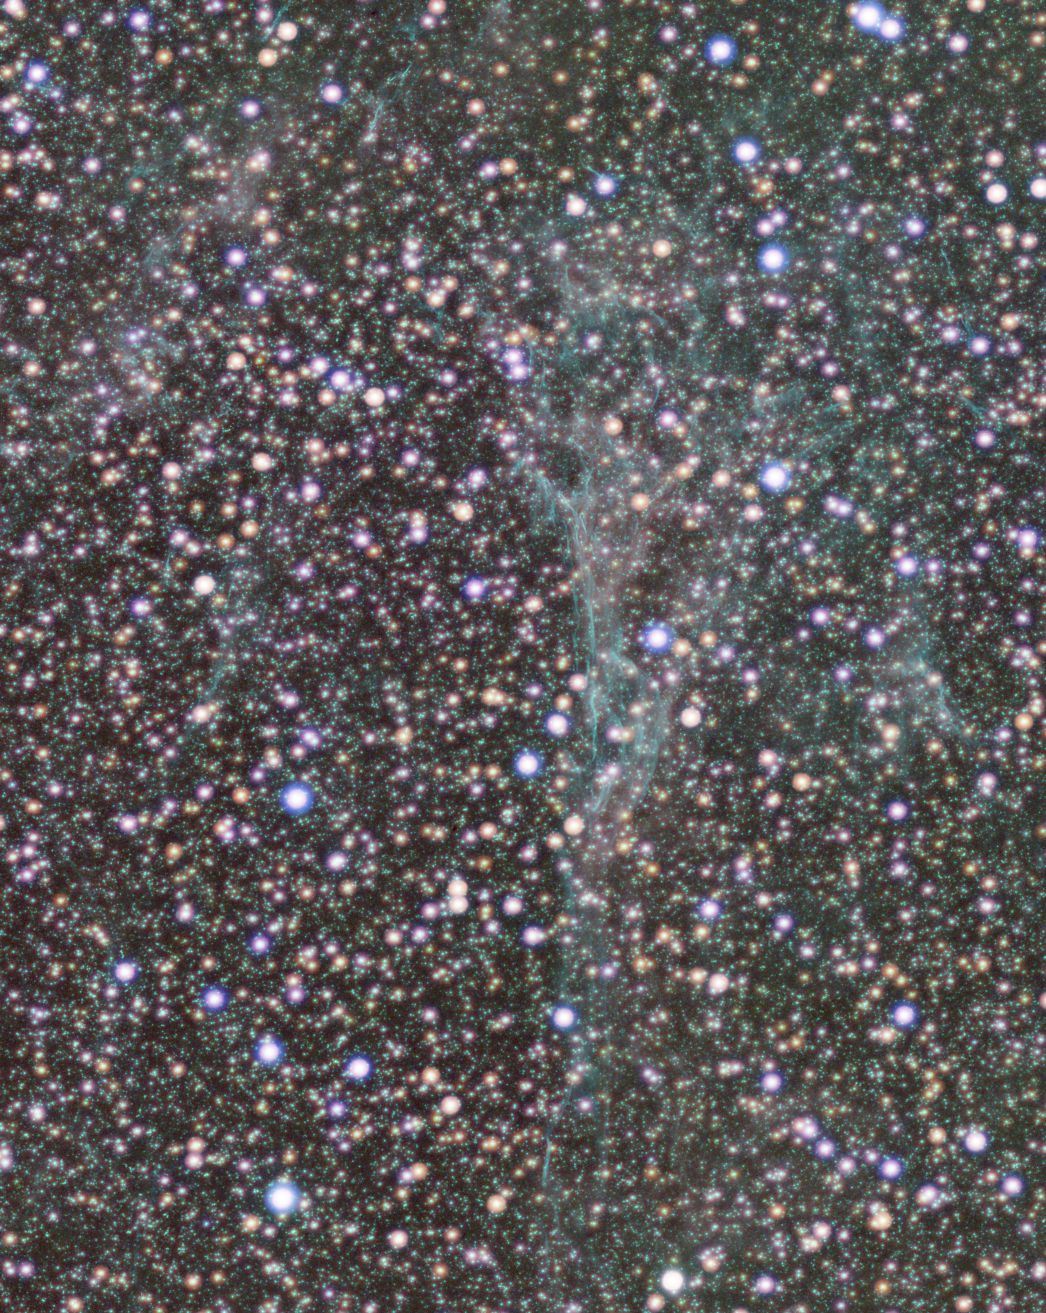 Pickering's triangle in Veil Nebula